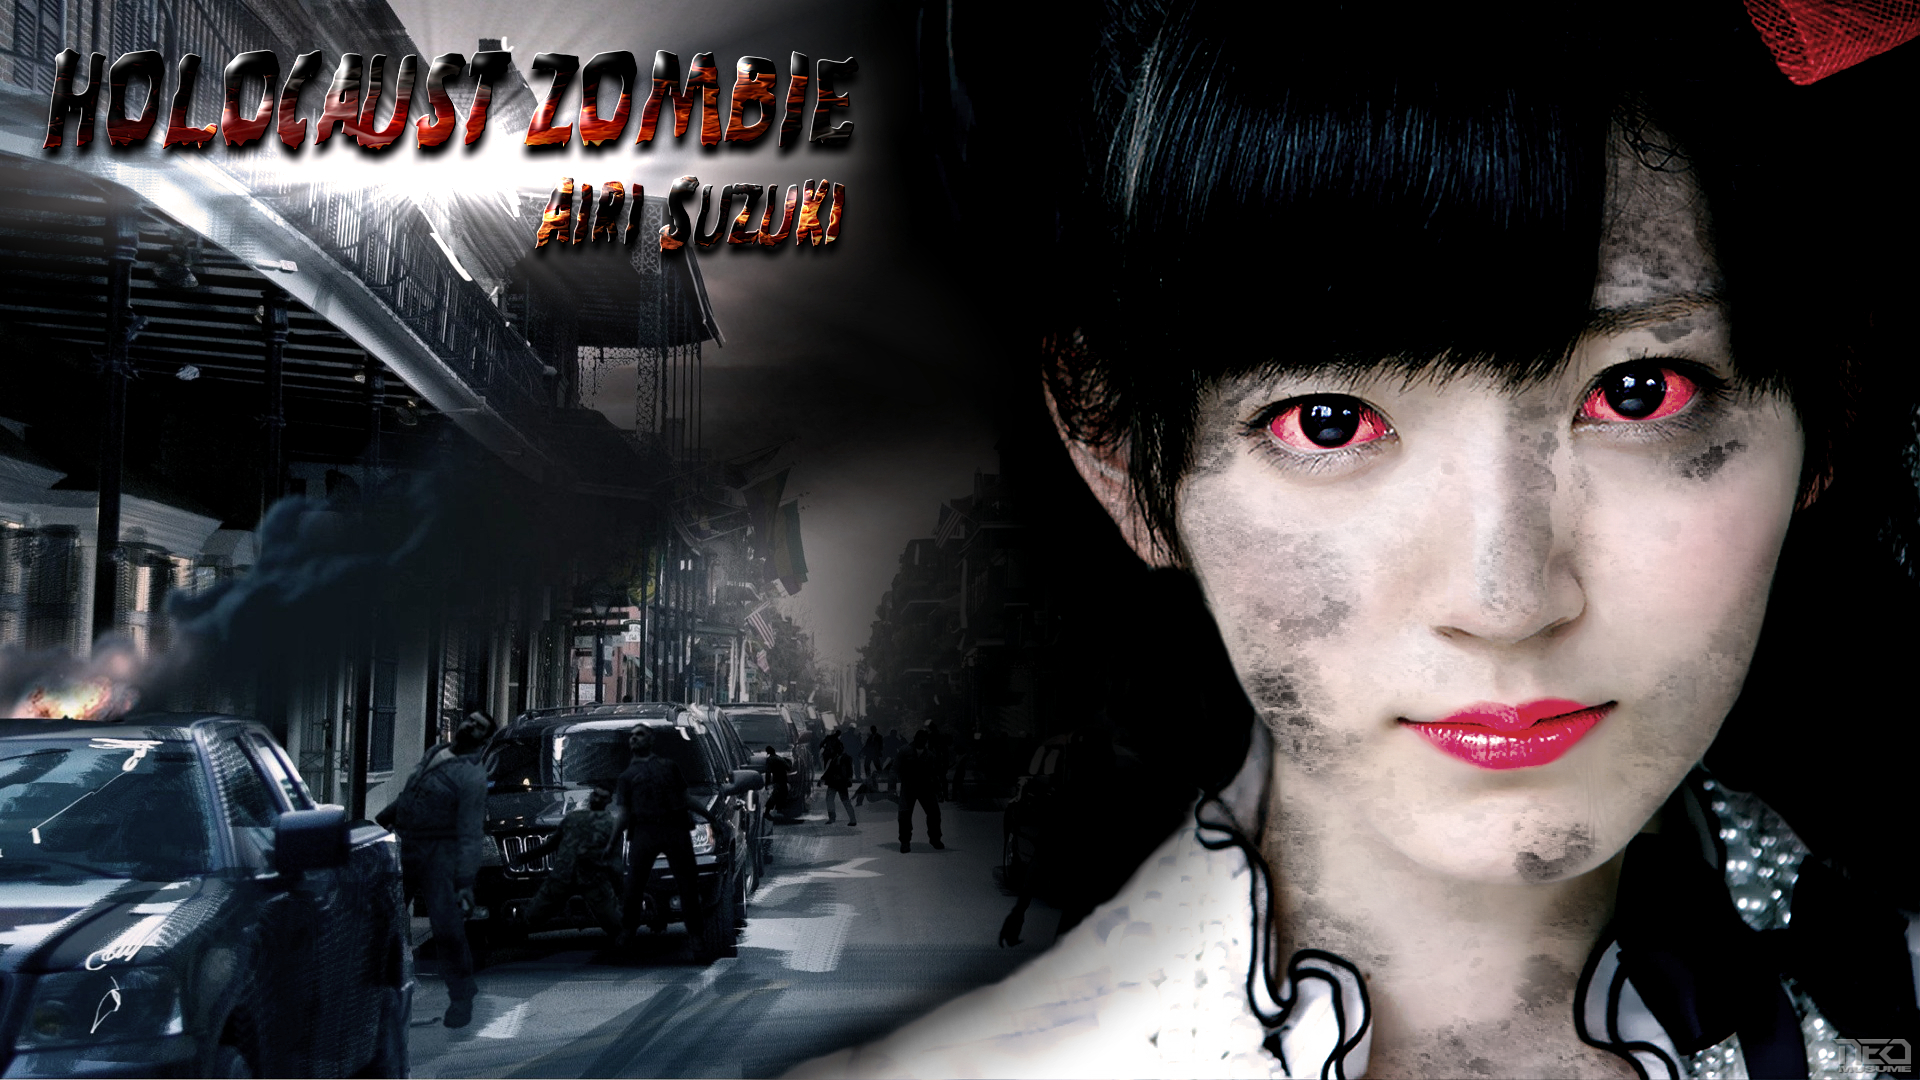 Holocaust Zombie Airi Suzuki By Neo Musume On Deviantart Images, Photos, Reviews